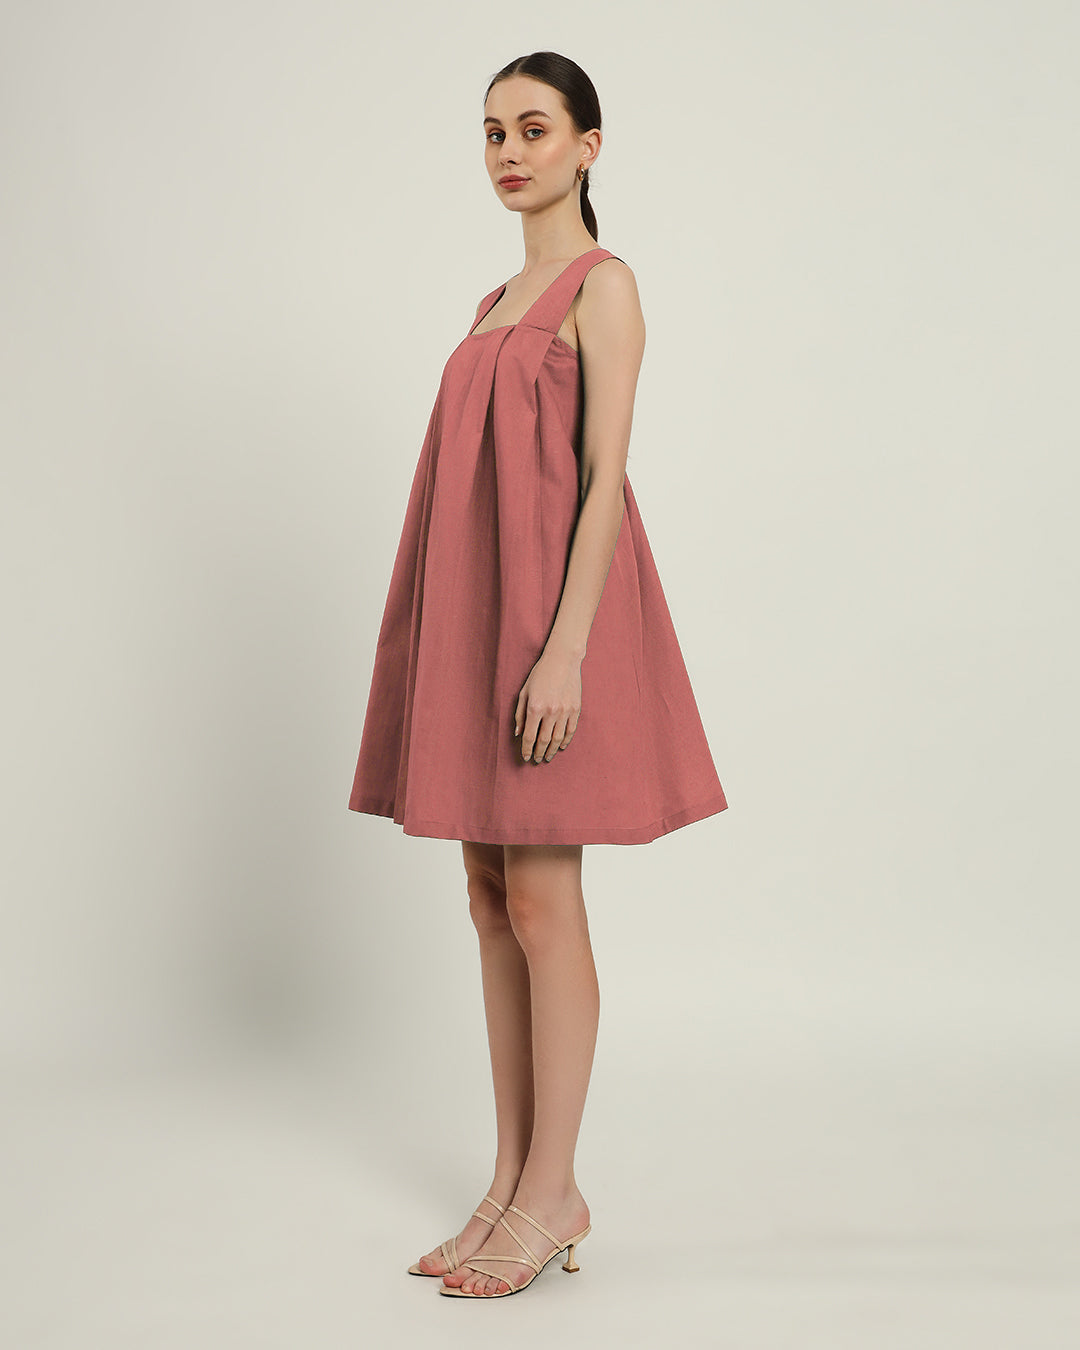 The Larissa Ivory Pink Cotton Dress